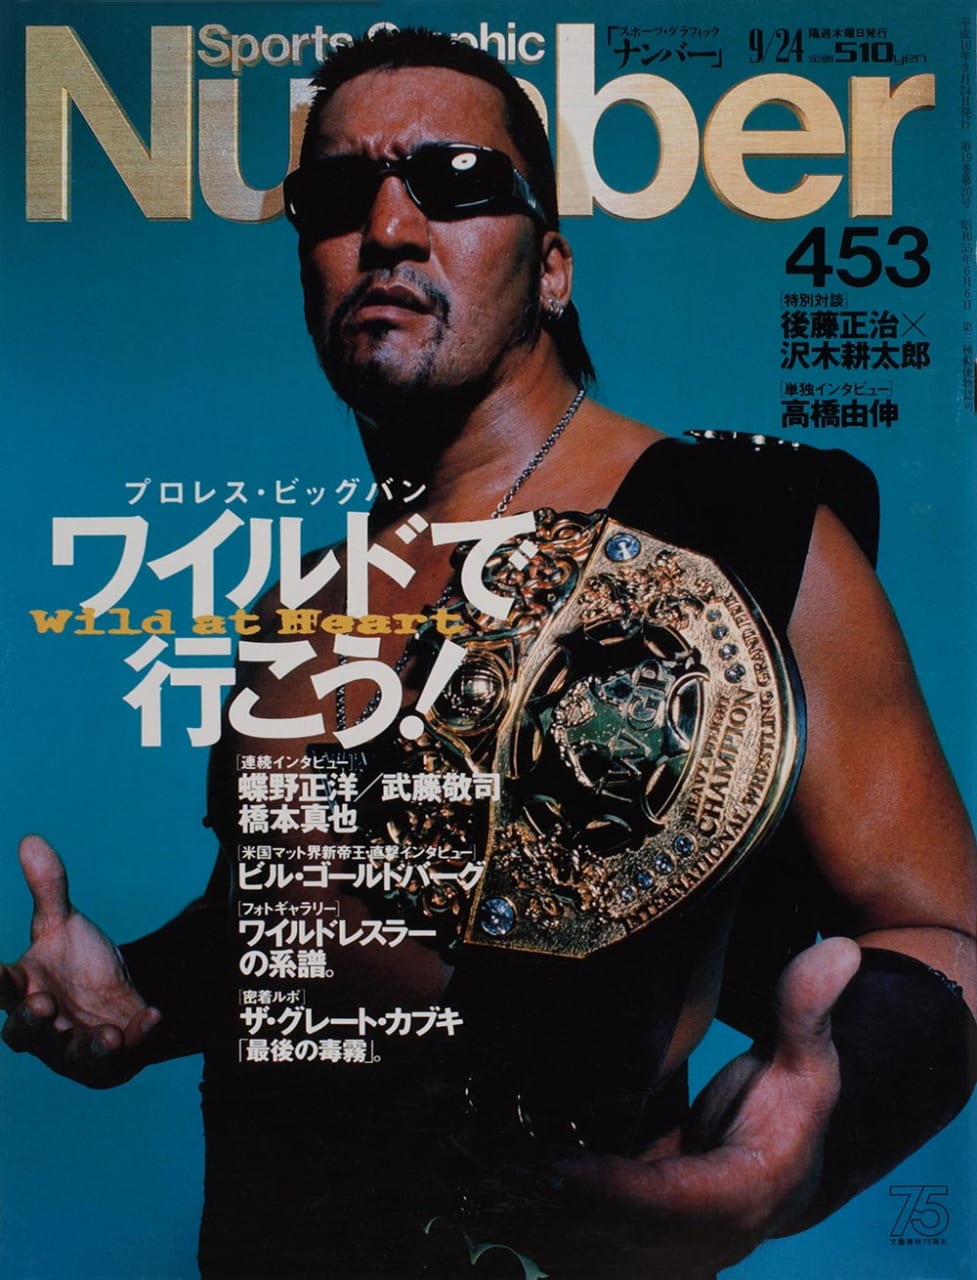 Sports Graphic Number 453号
1998年9月10日発売
表紙撮影：北島明